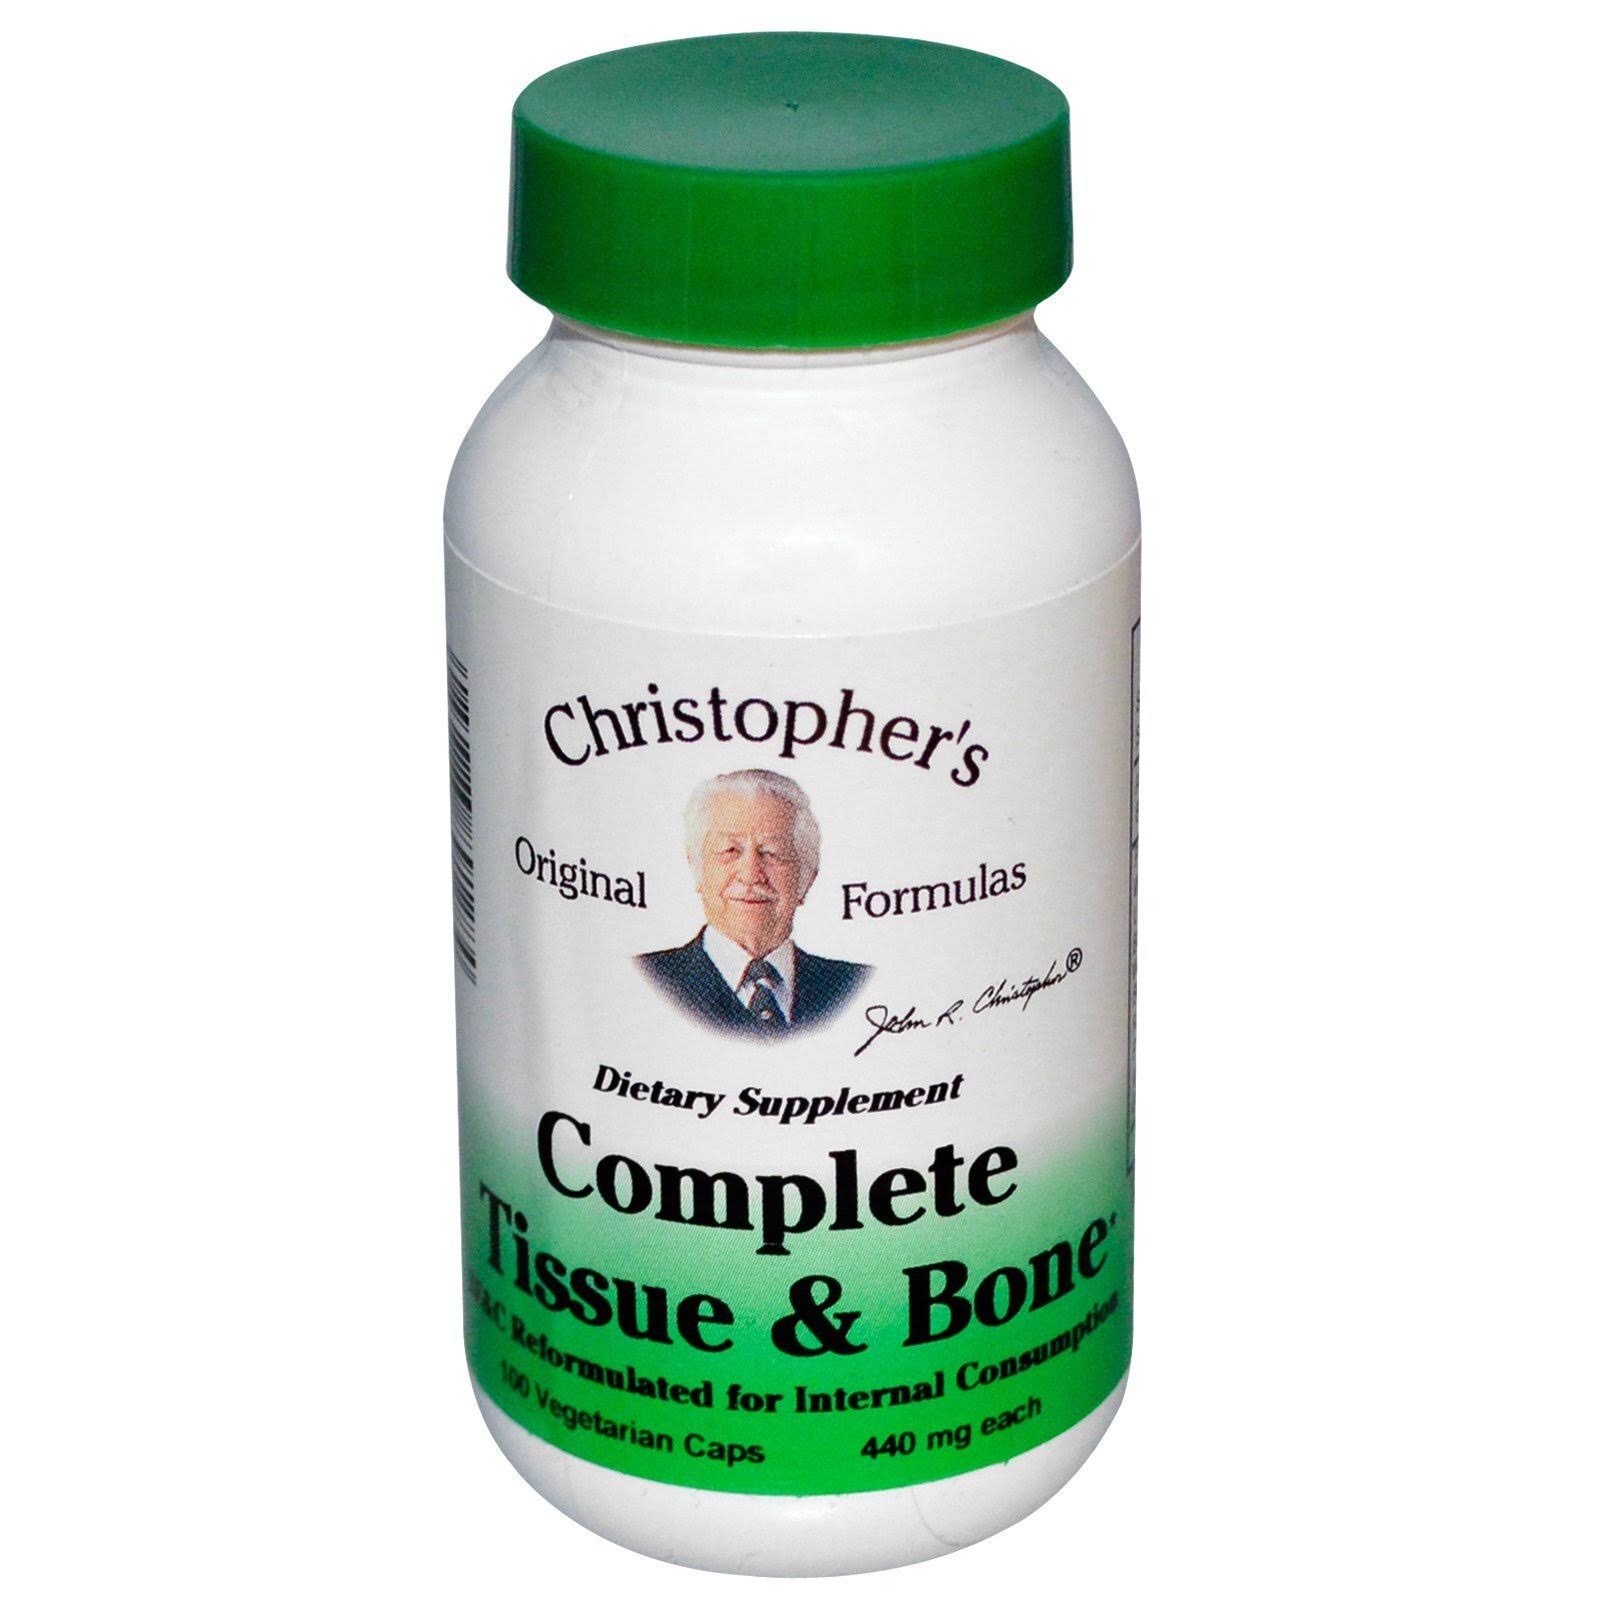 DR. Christopher's Formulas Complete Tissue & Bone